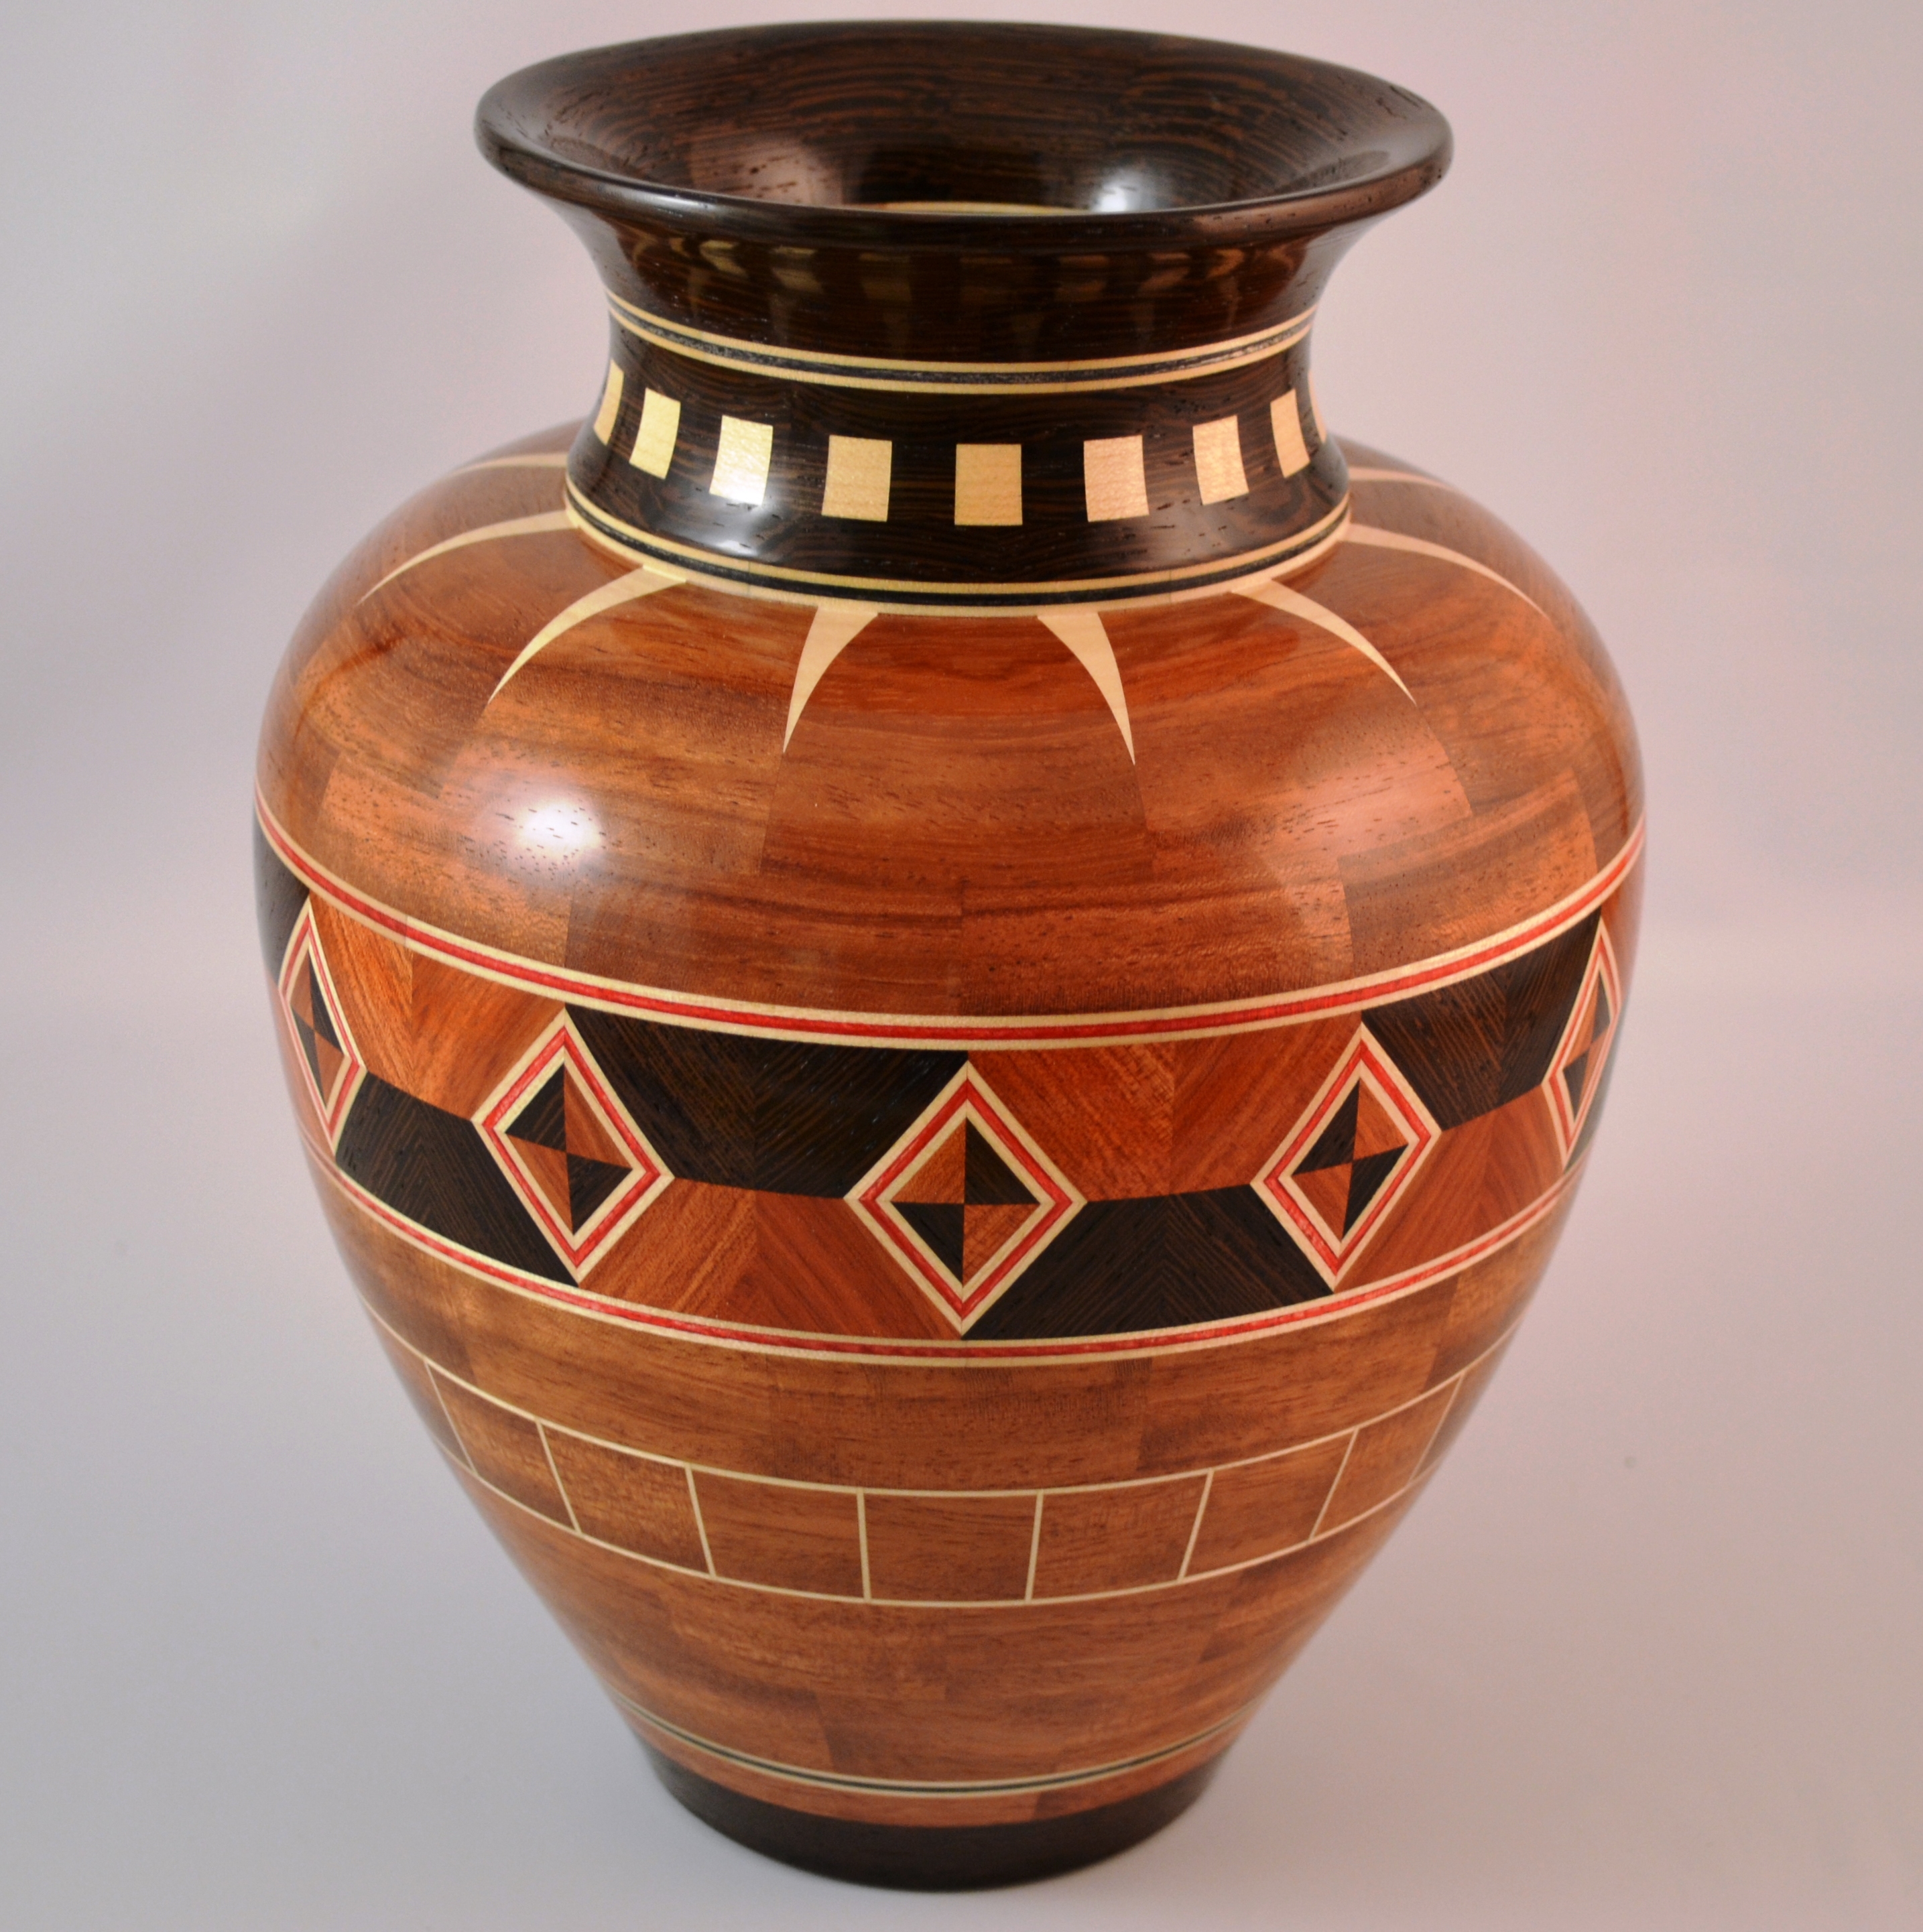 Vase with Diamonds – 8-1/4” diameter X 9-1/2” tall – woods used: Bubinga, Wenge, Maple and dyed veneers – 571 pieces of wood